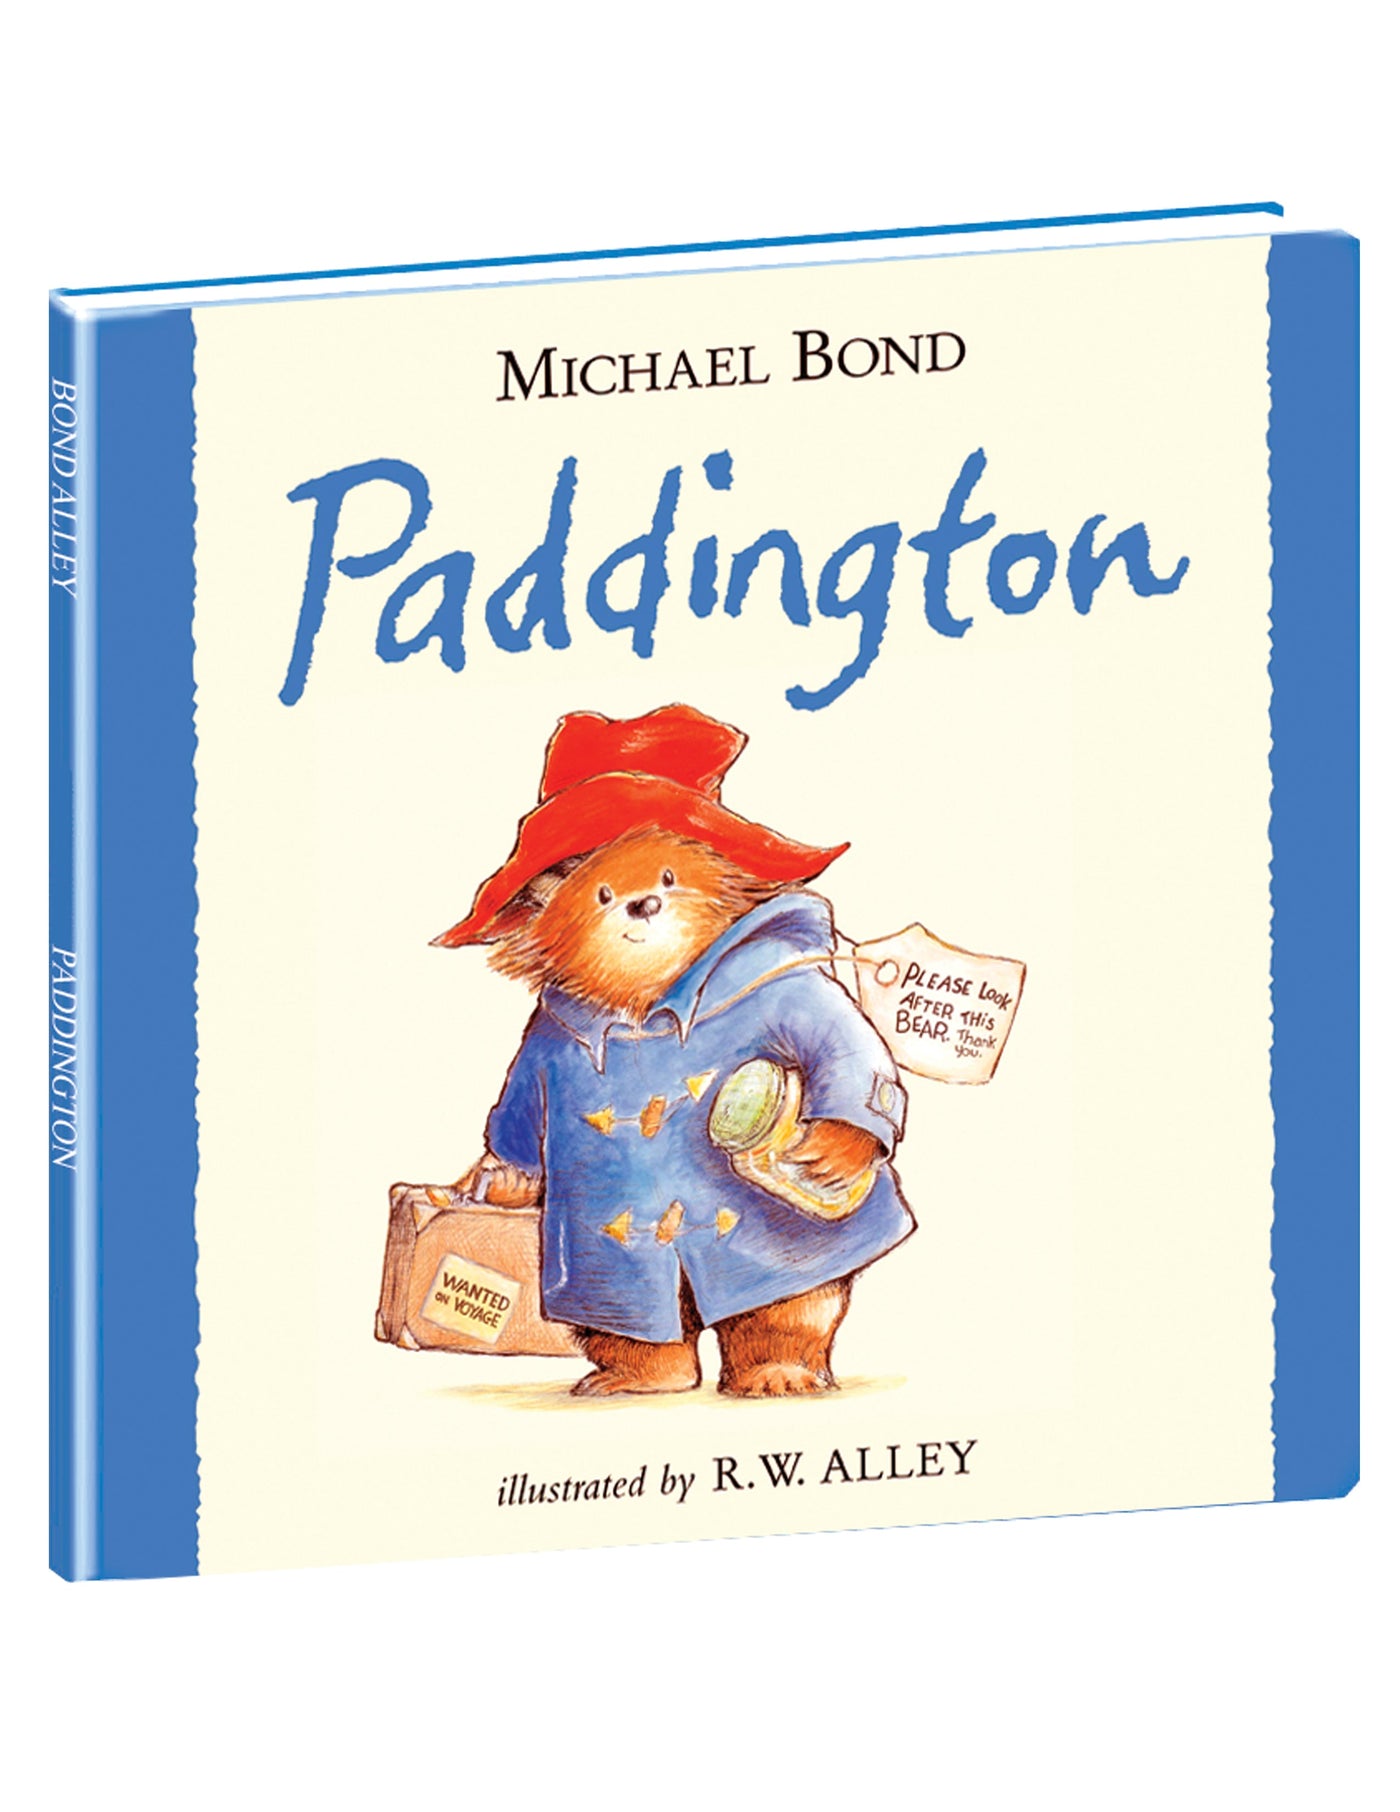 Paddington Bear Hardcover Story Book by Michael Bond